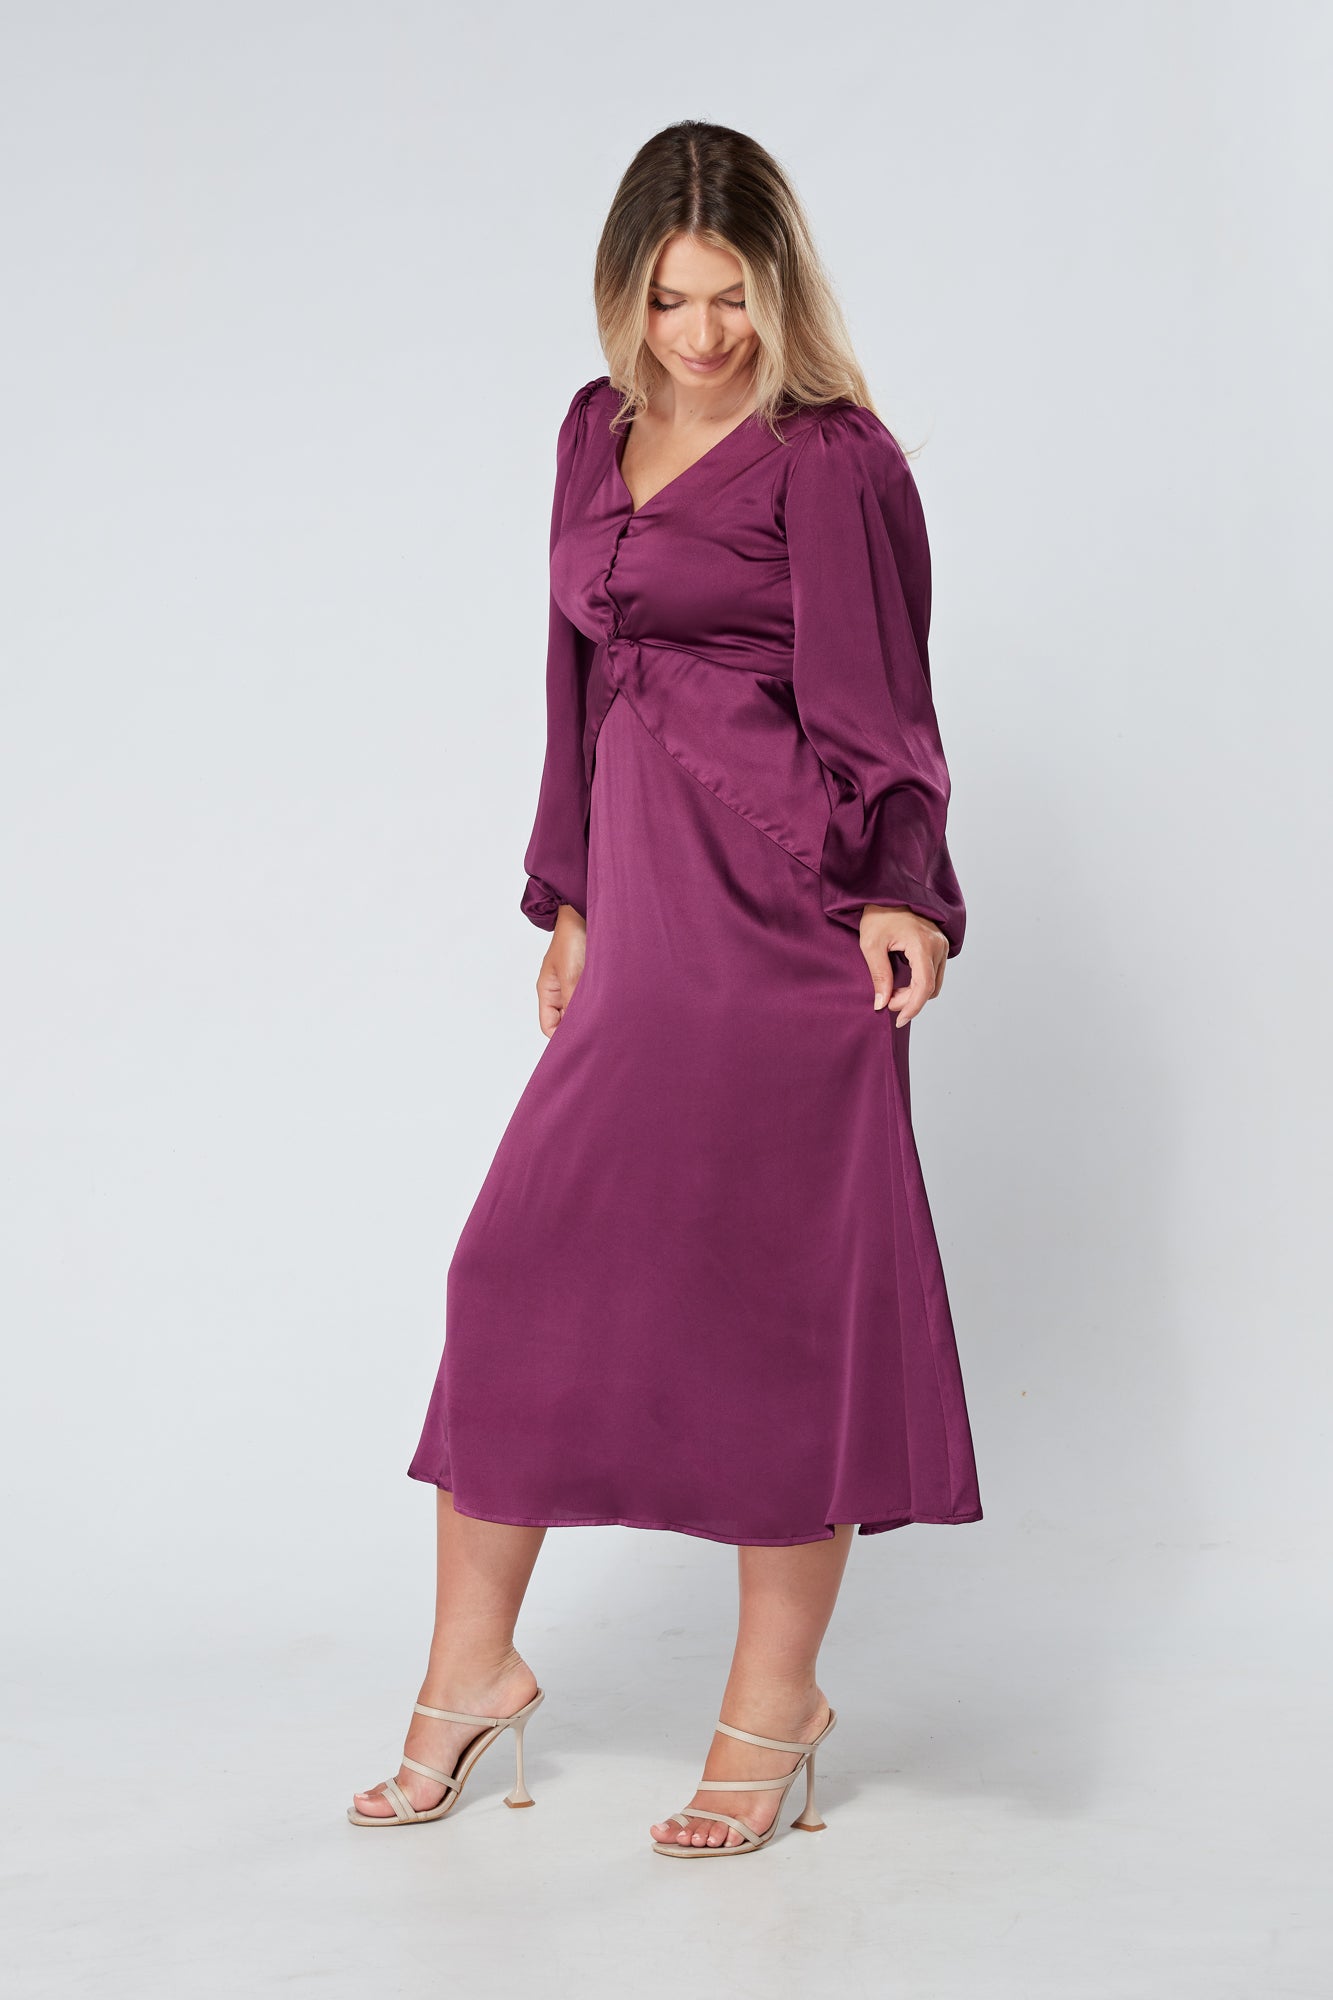 Calissa Purple Satin-feel Folded Body Midaxi Dress